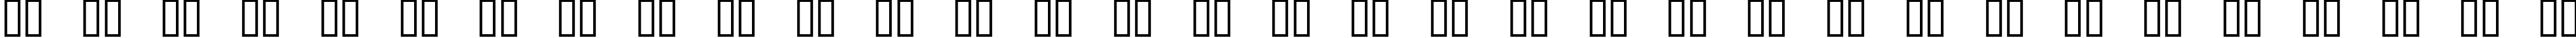 Пример написания русского алфавита шрифтом Curlmudgeon Wideside